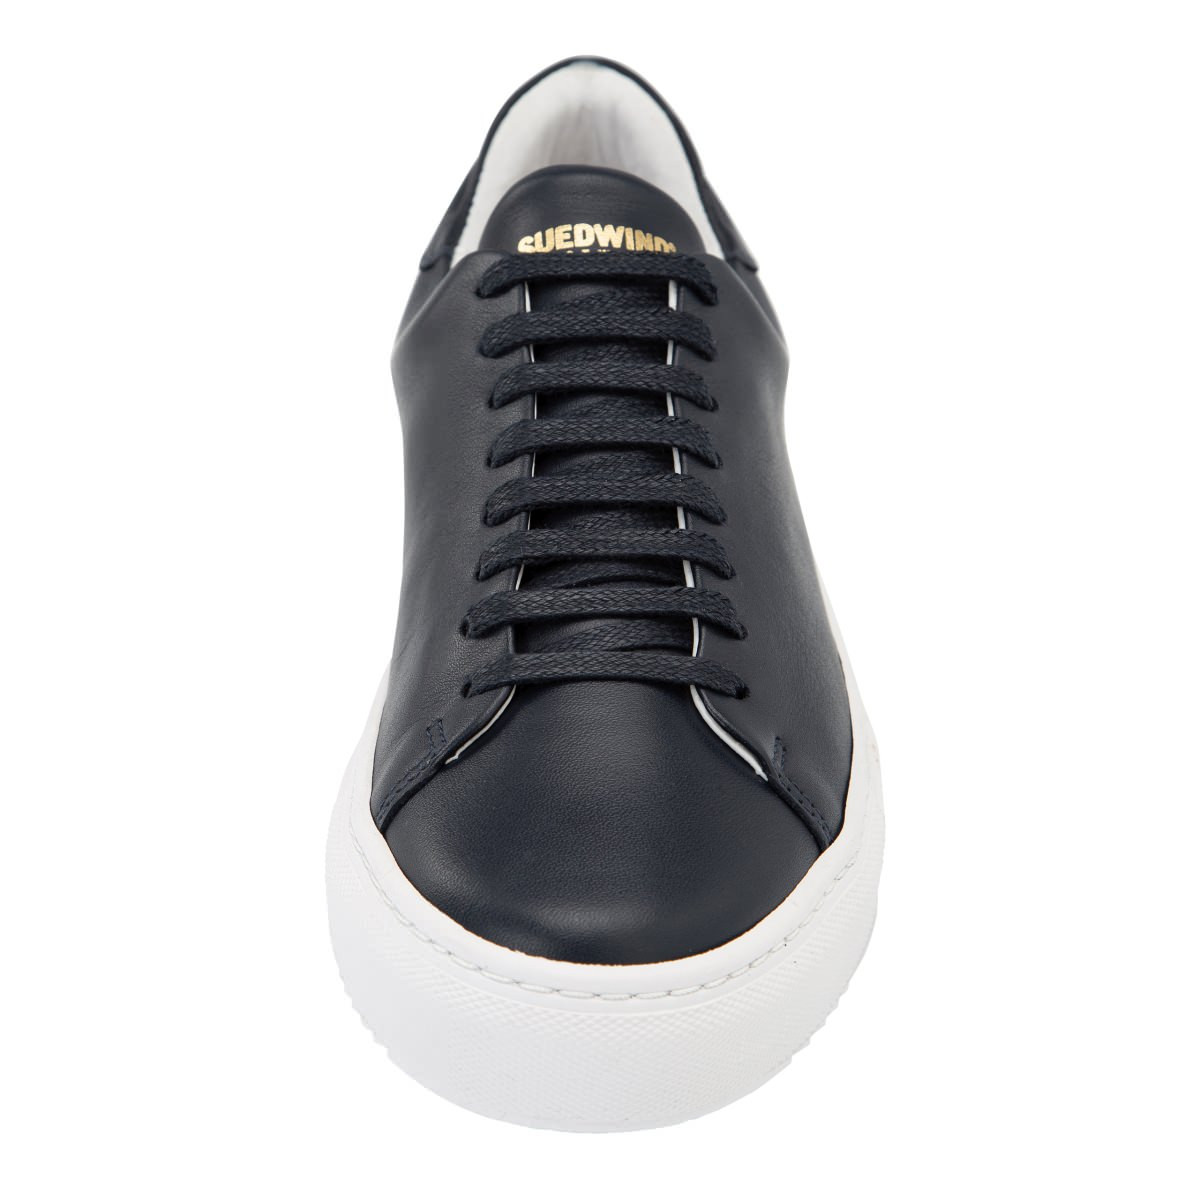 Suedwind-Ashton-Leather-Leder-Sneaker-Schuhe-Boots-Navy-Blue-Navy-Blau-10170015-03_1280x1280